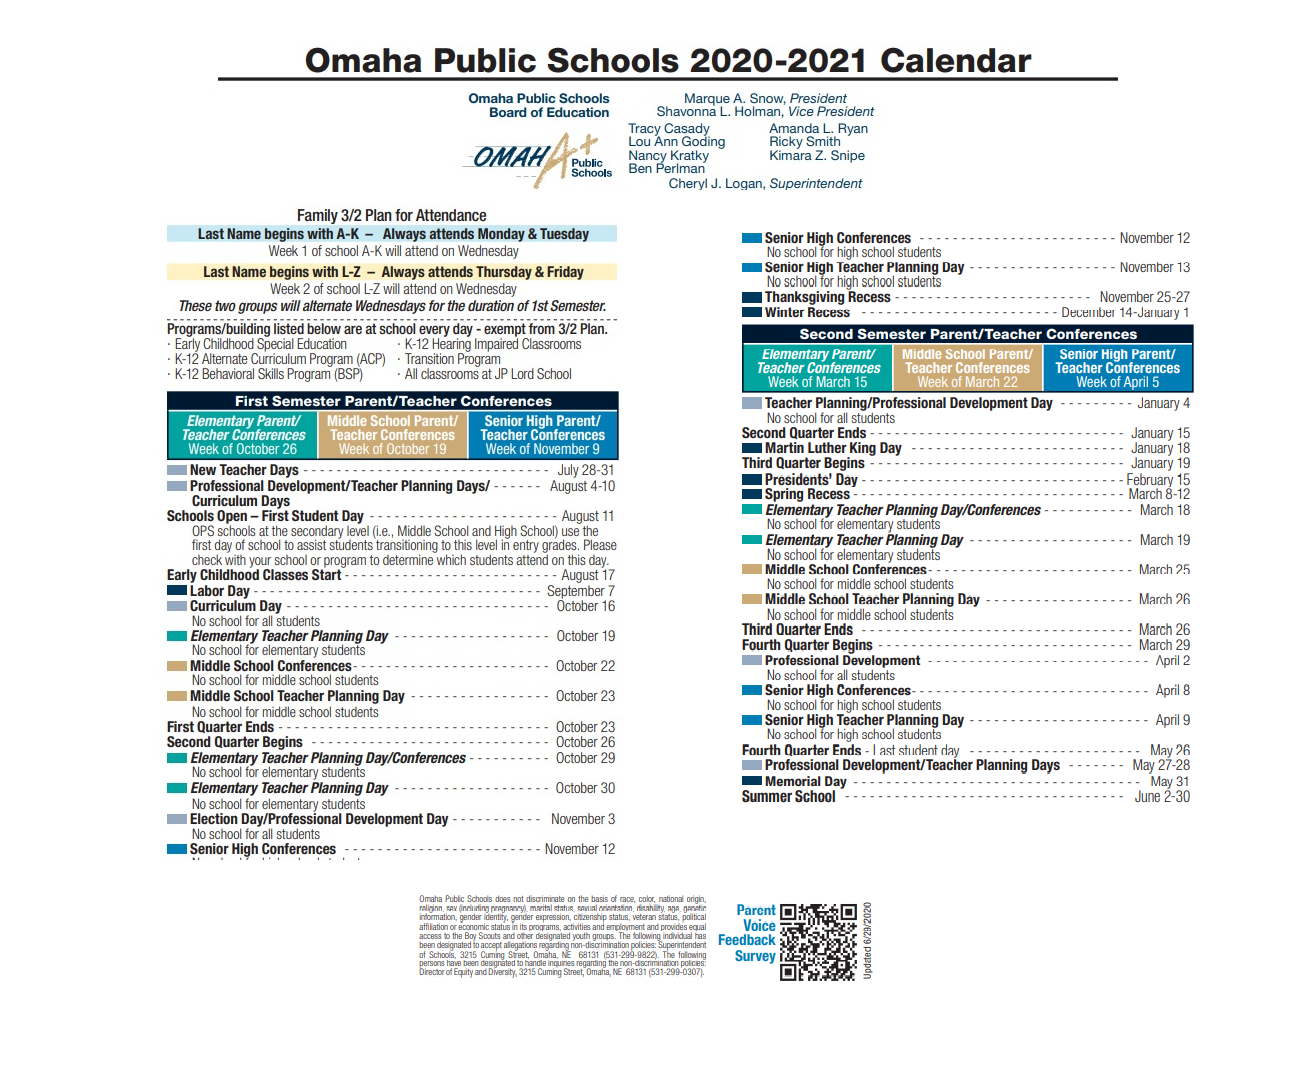 District School Academic Calendar Key for Sunny Slope Elementary School